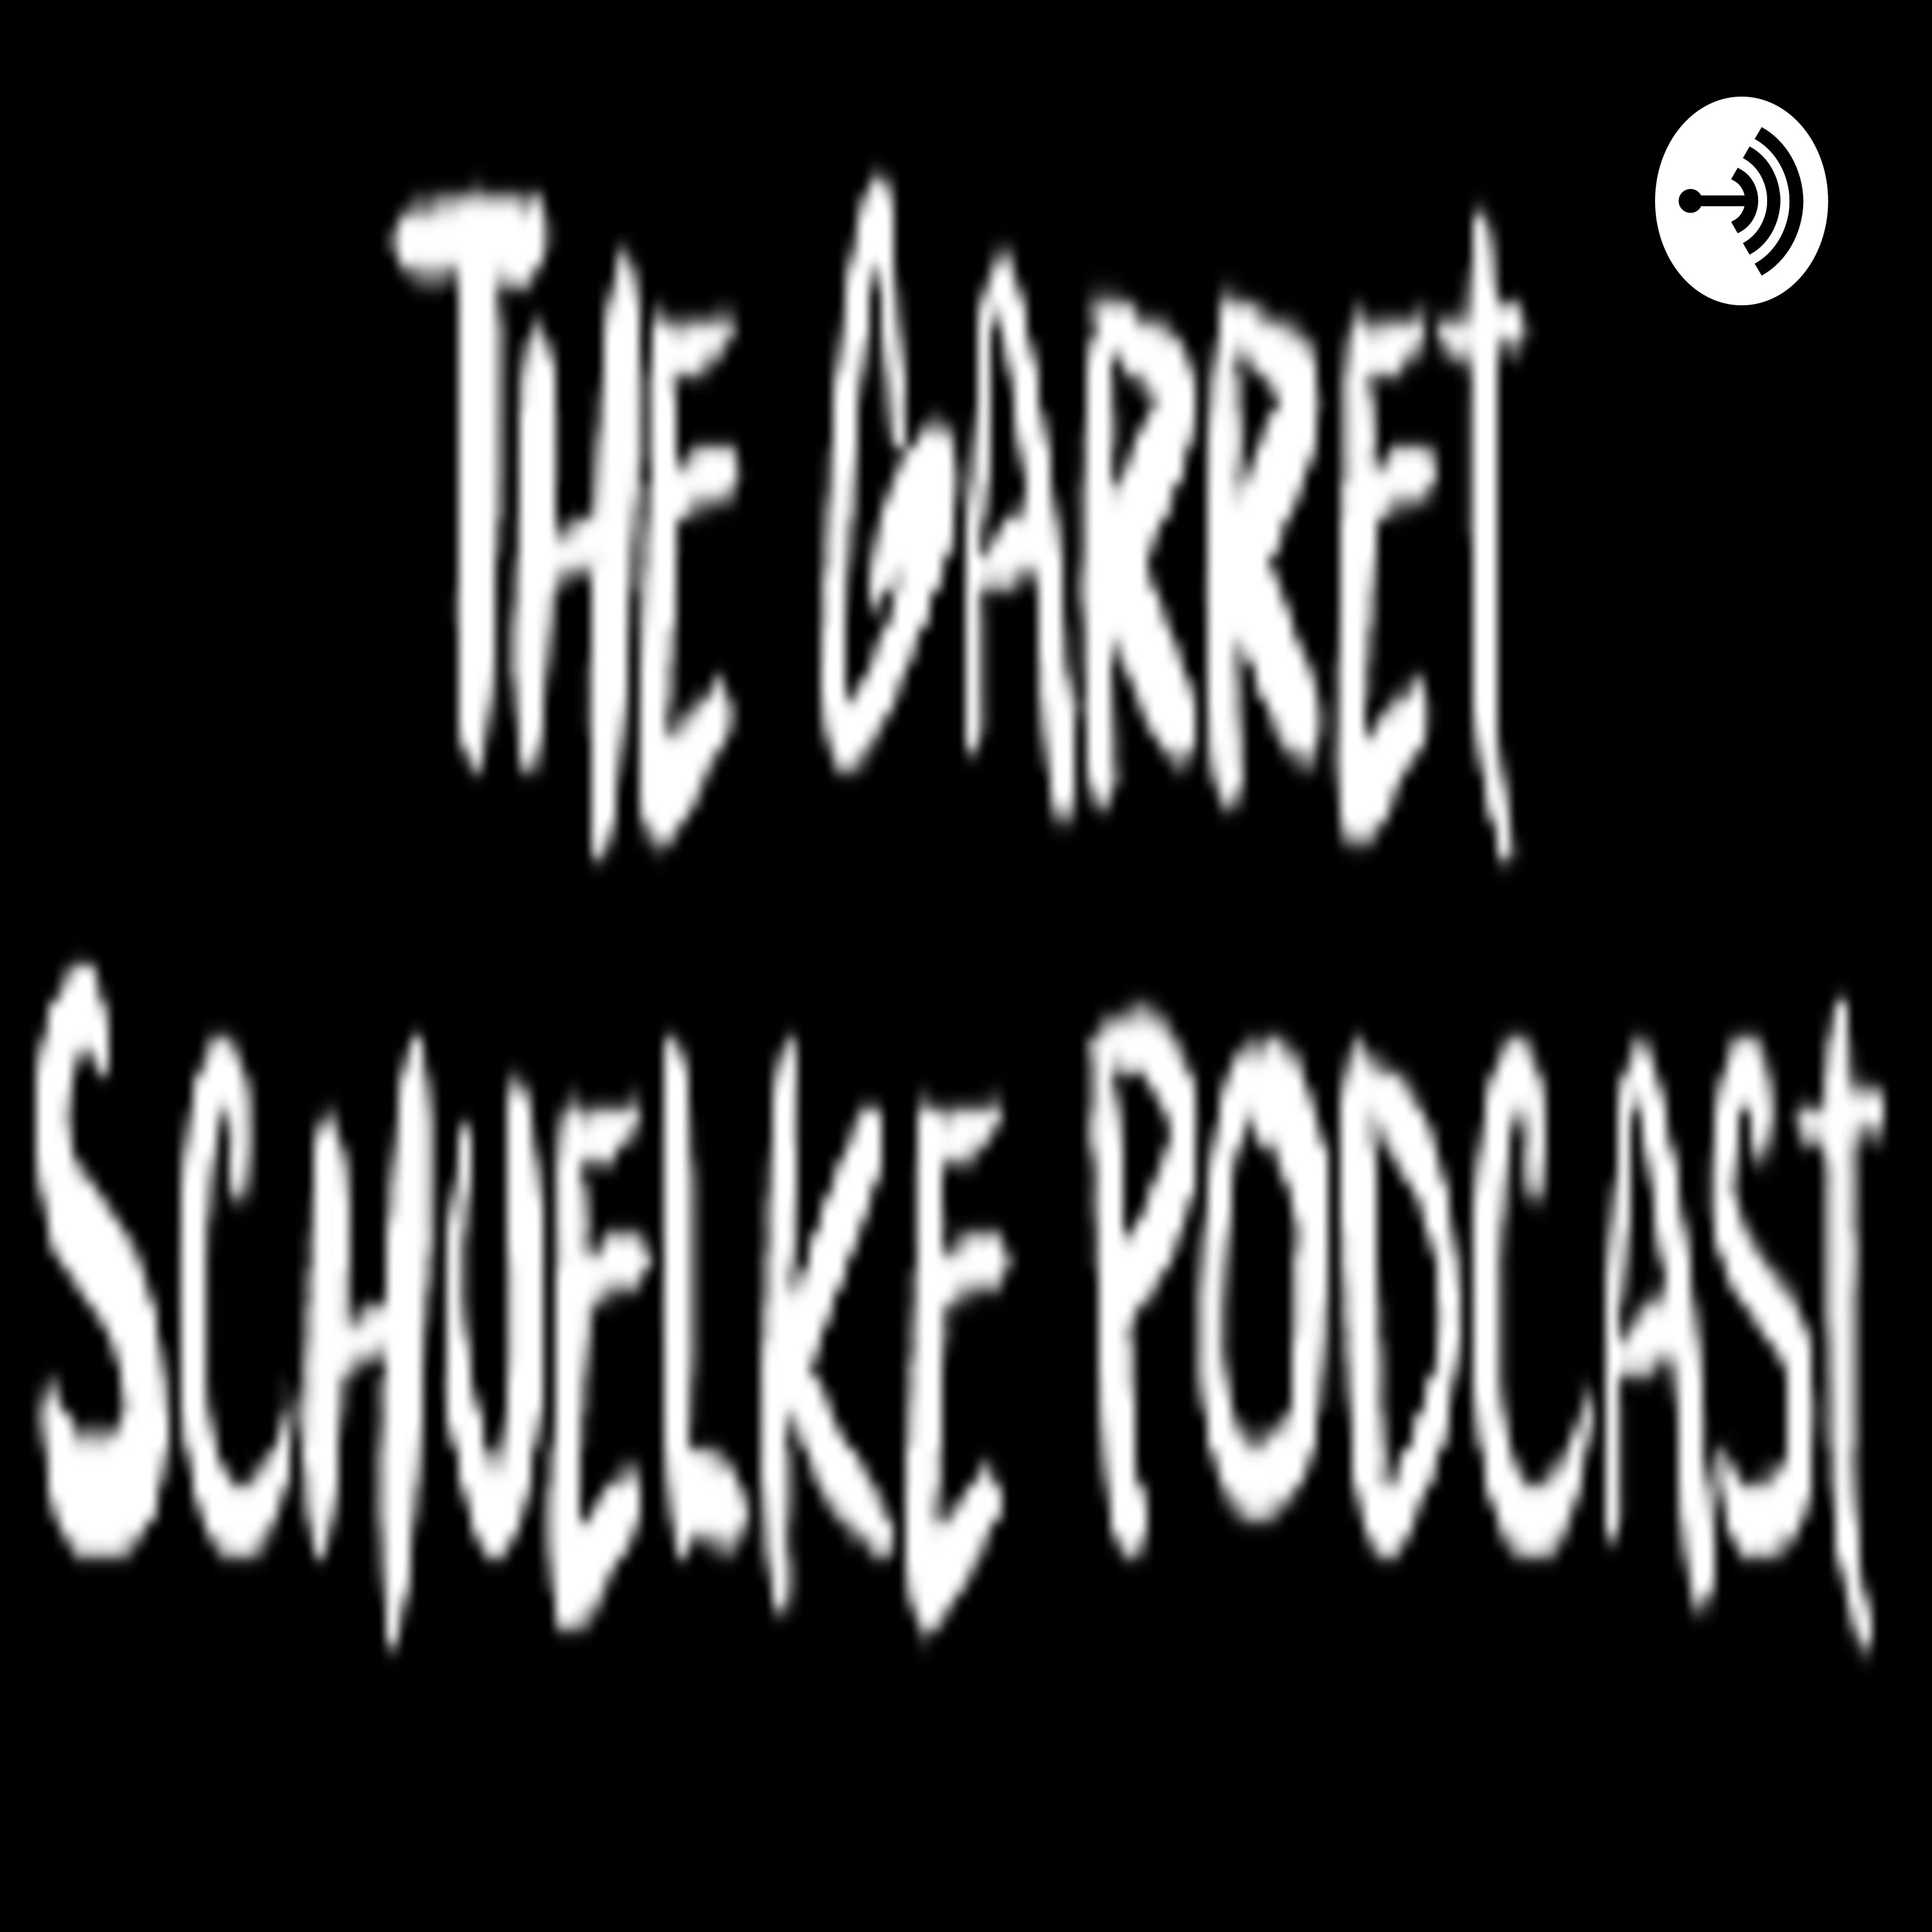 The Garret Schuelke Podcast Episode 9: Christmas In Alpenis 2: The Revenge with Adam Strohschein